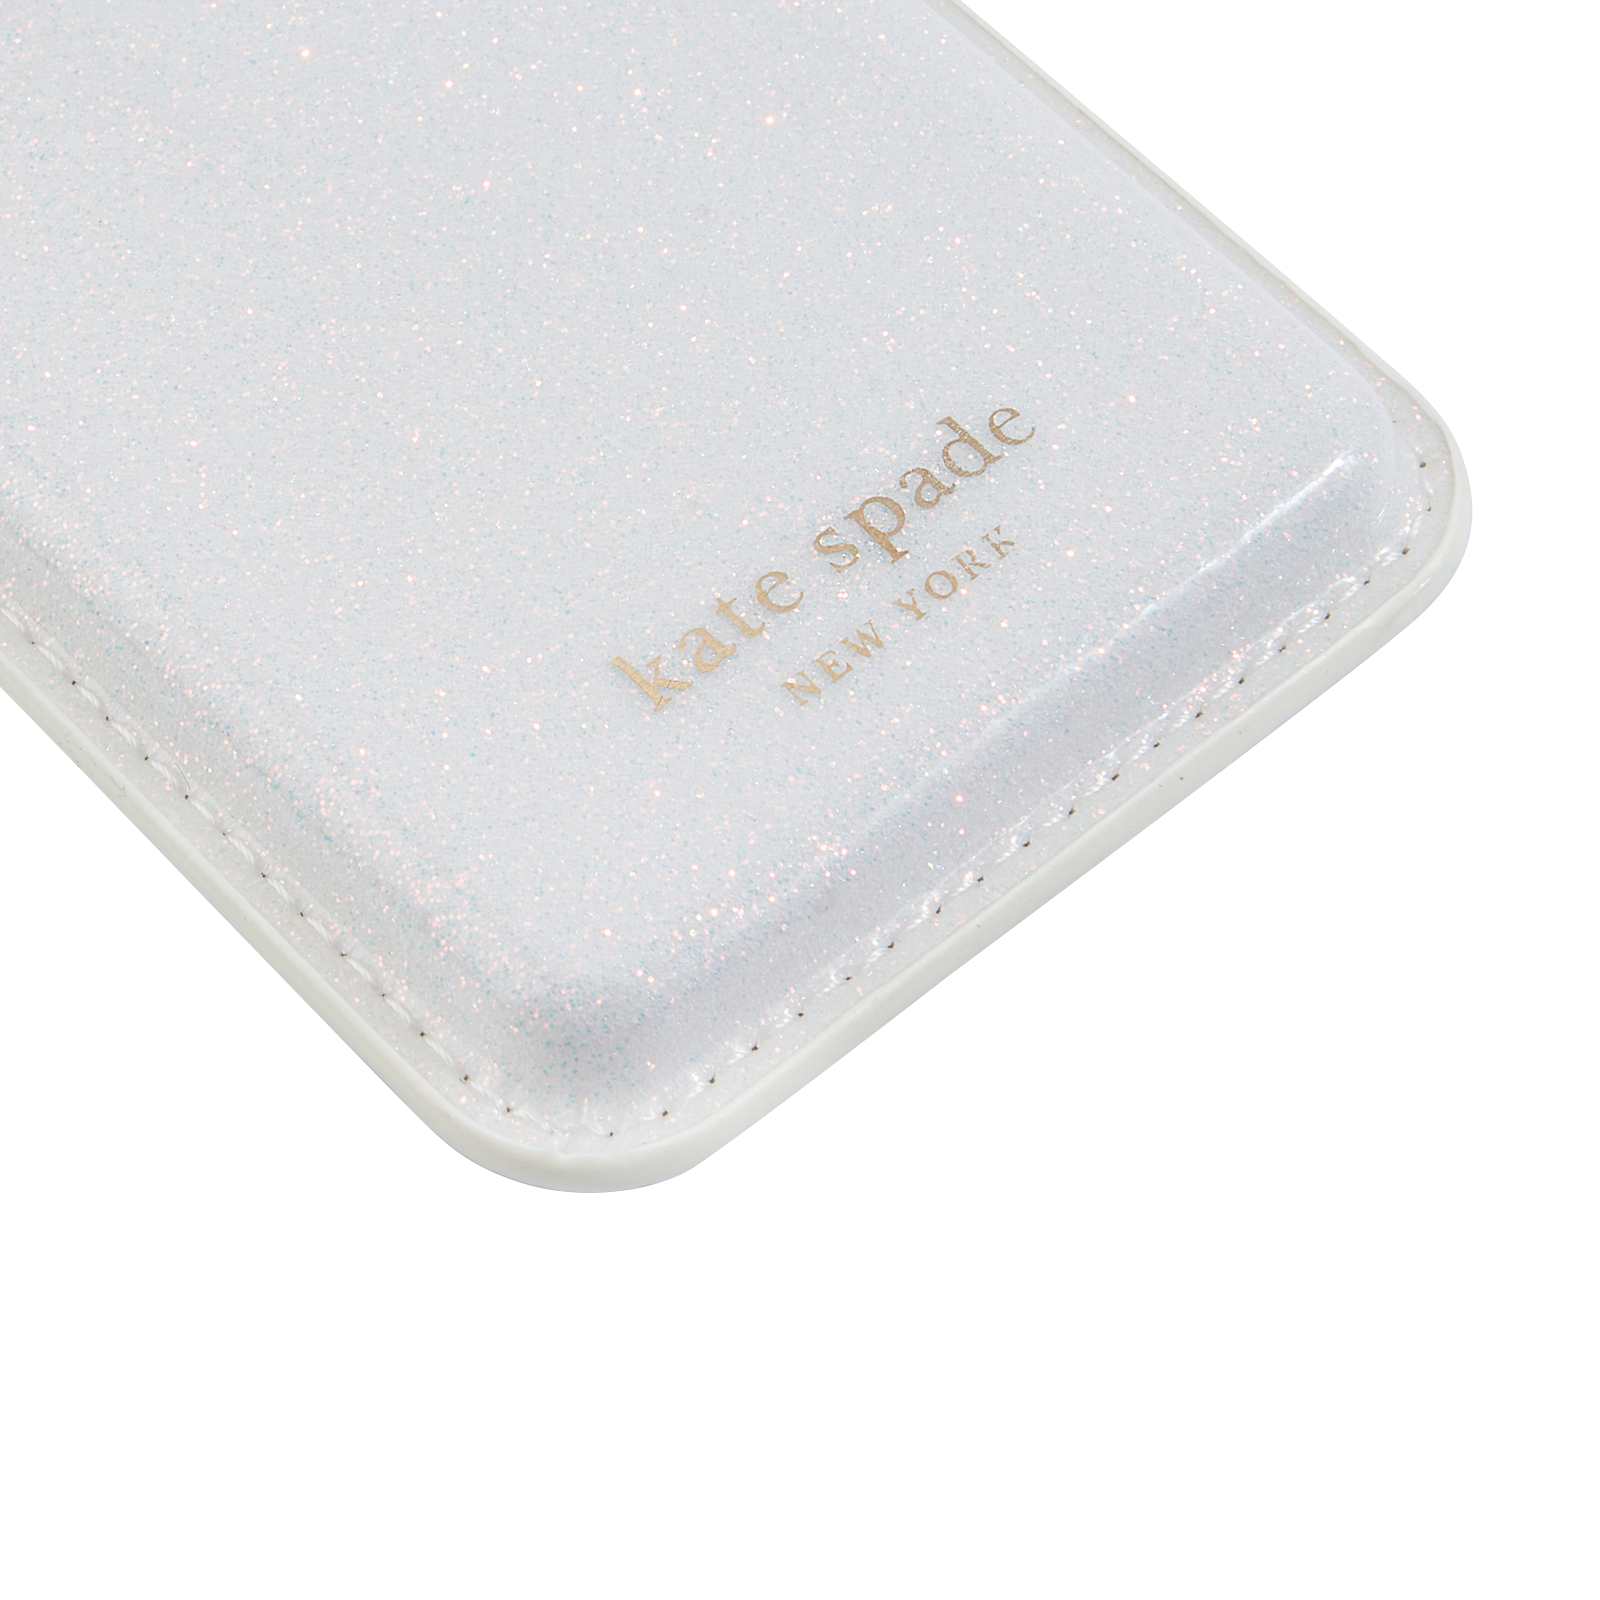 Kate Spade New York รุ่น Magnetic Card Holder - ที่เก็บบัตรติดหลังมือถือ - ลาย White Glitter